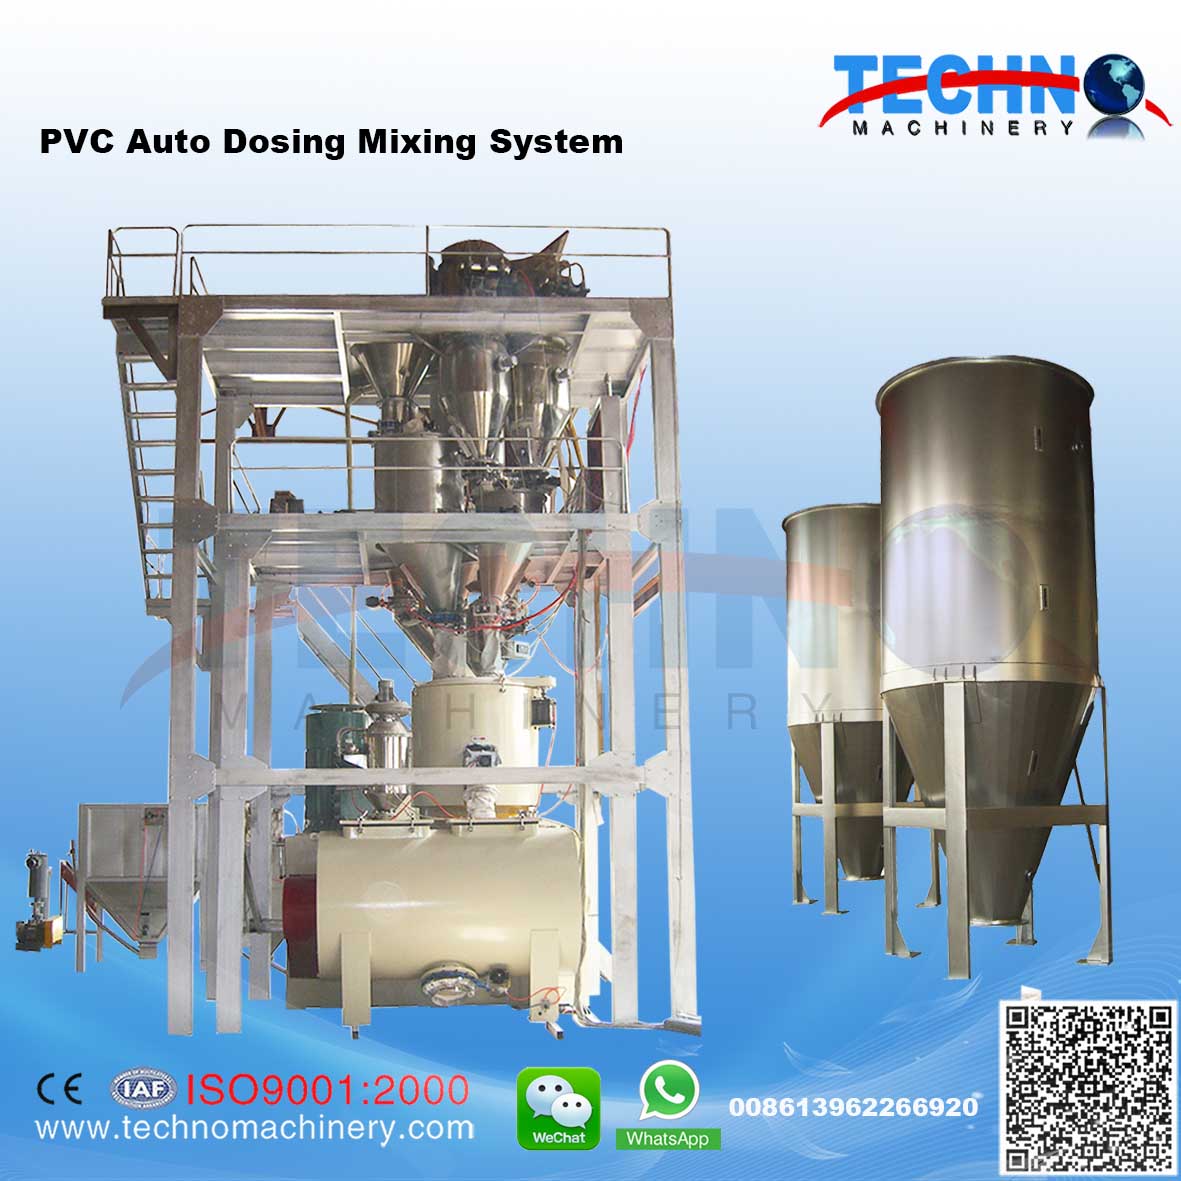 Pneumatic PVC Bulk Material Handling System/PVC Compounding System